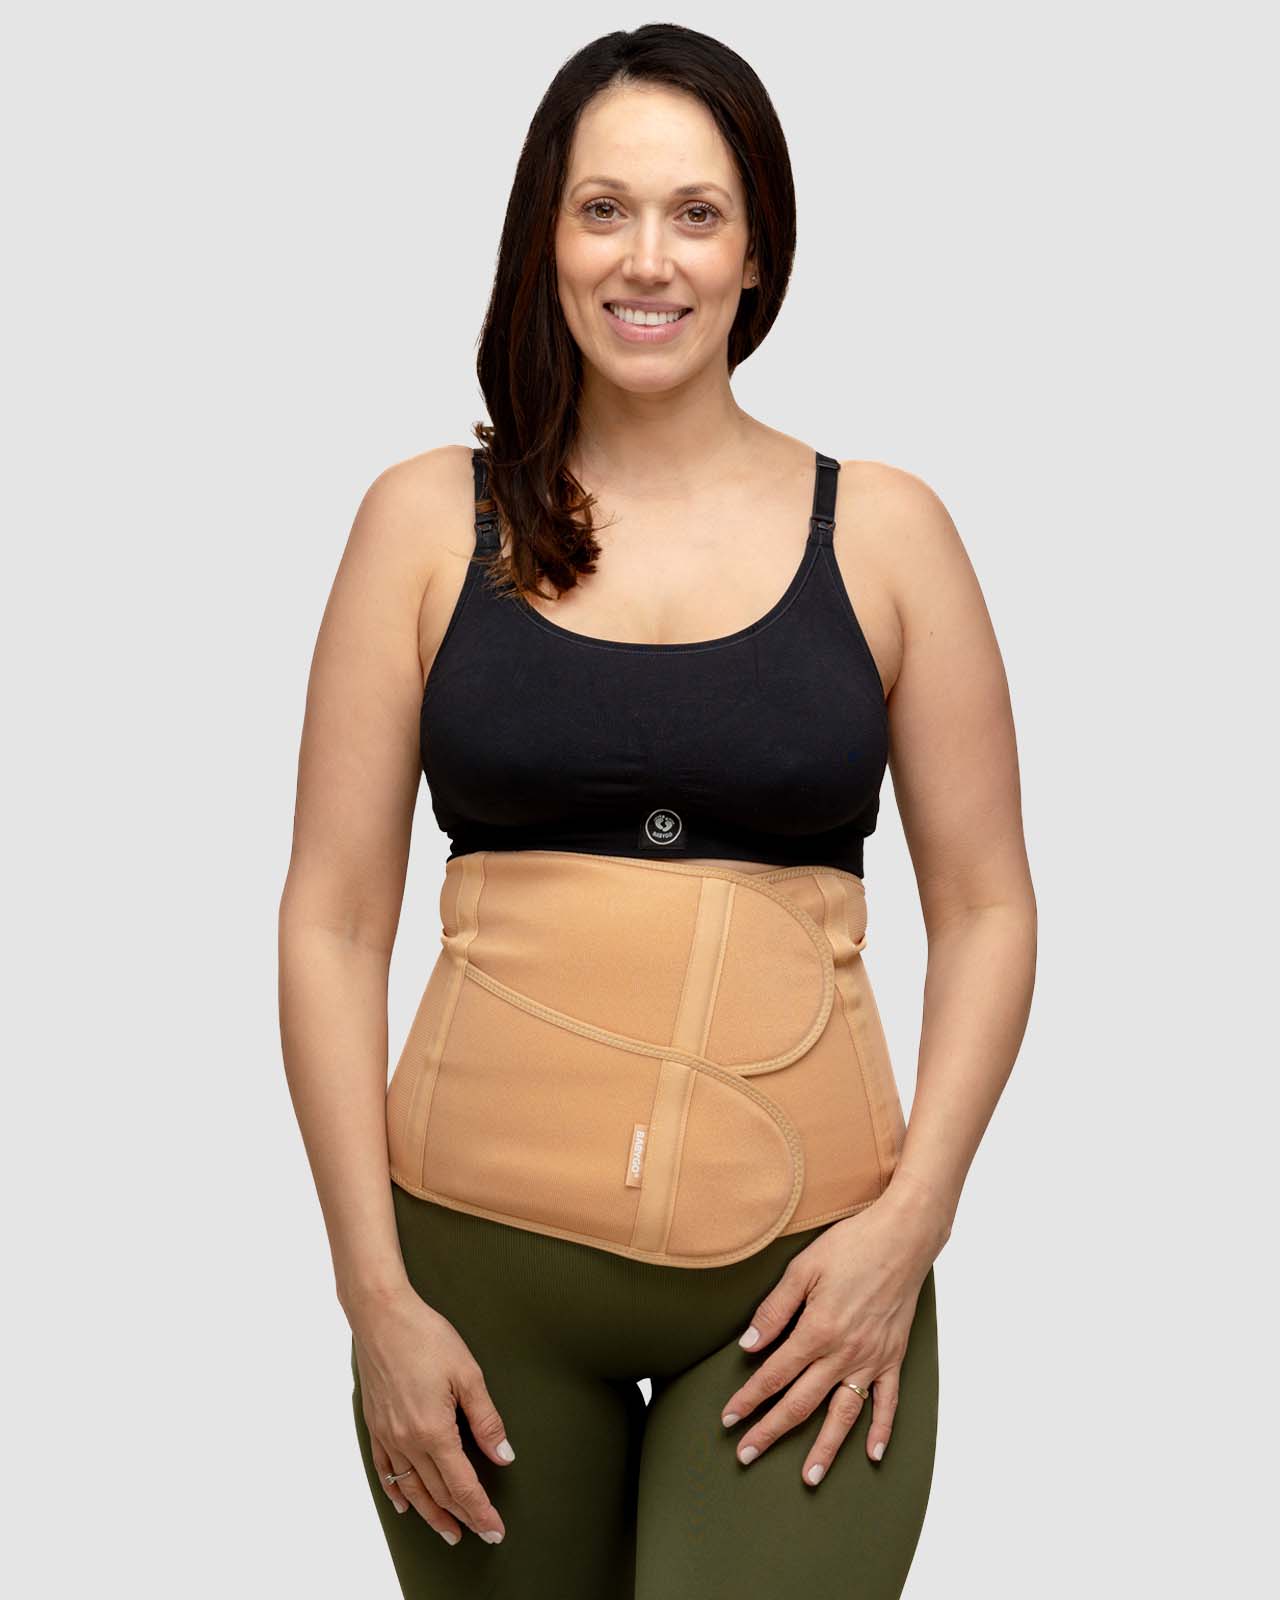 woman wearing postpartum recovery belt